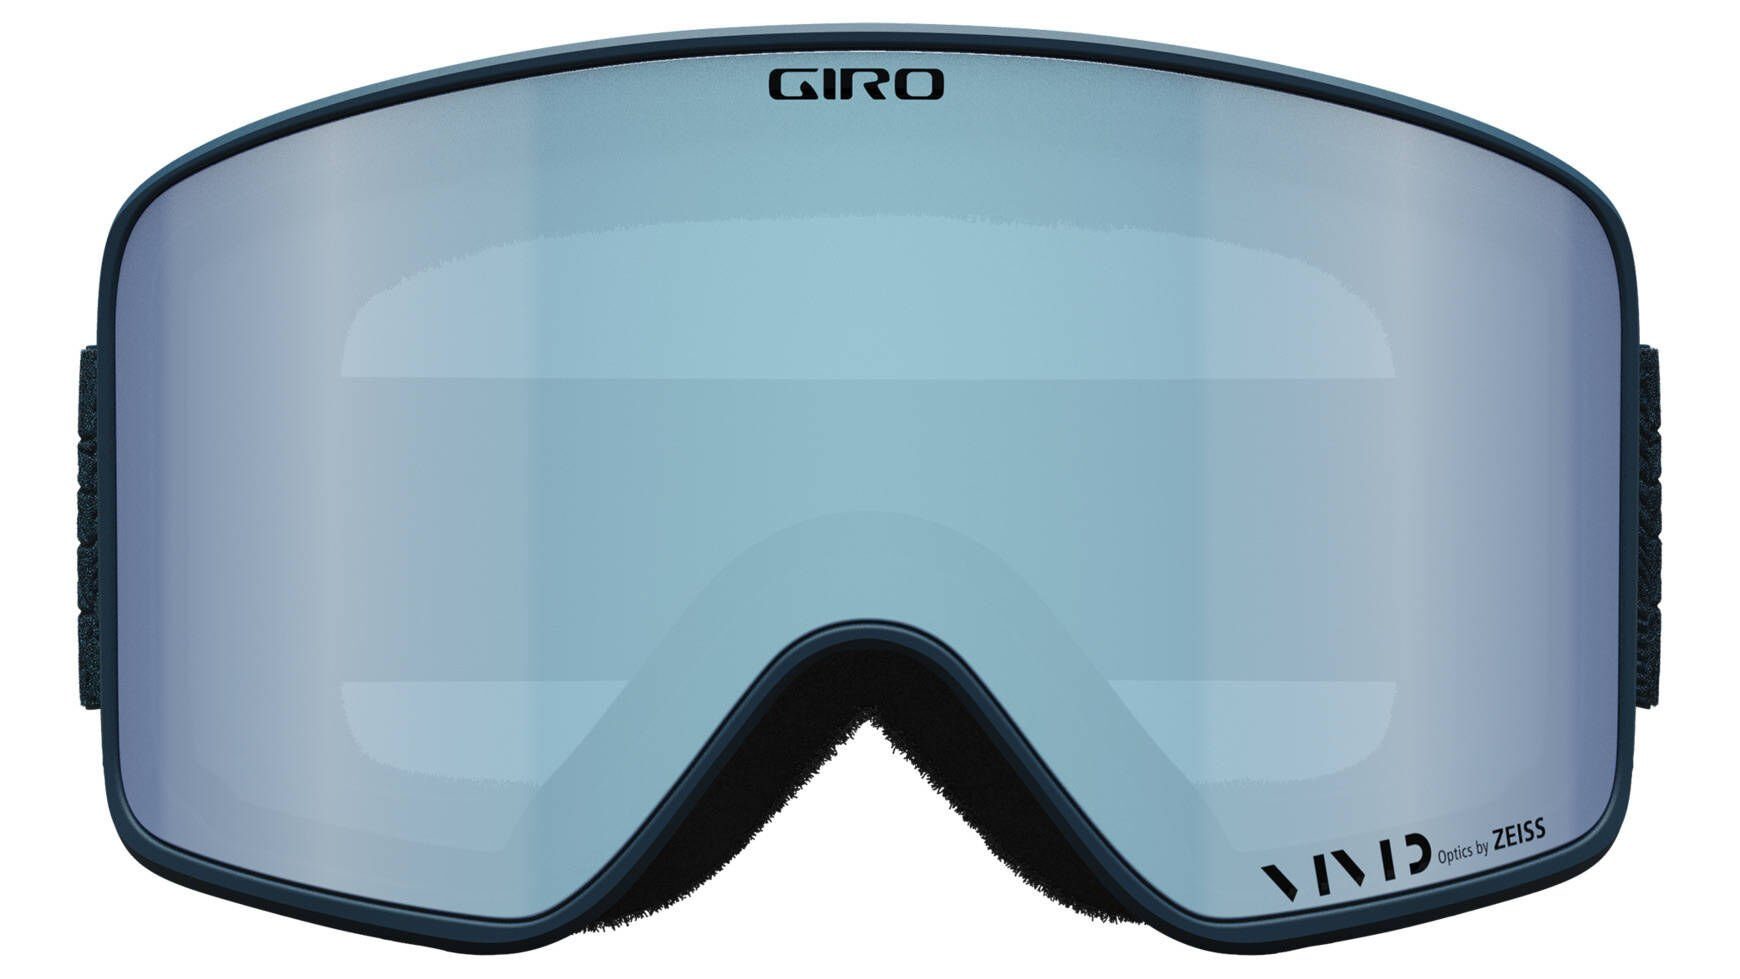 Giro (296) blau Skibrille "Method" Skibrille